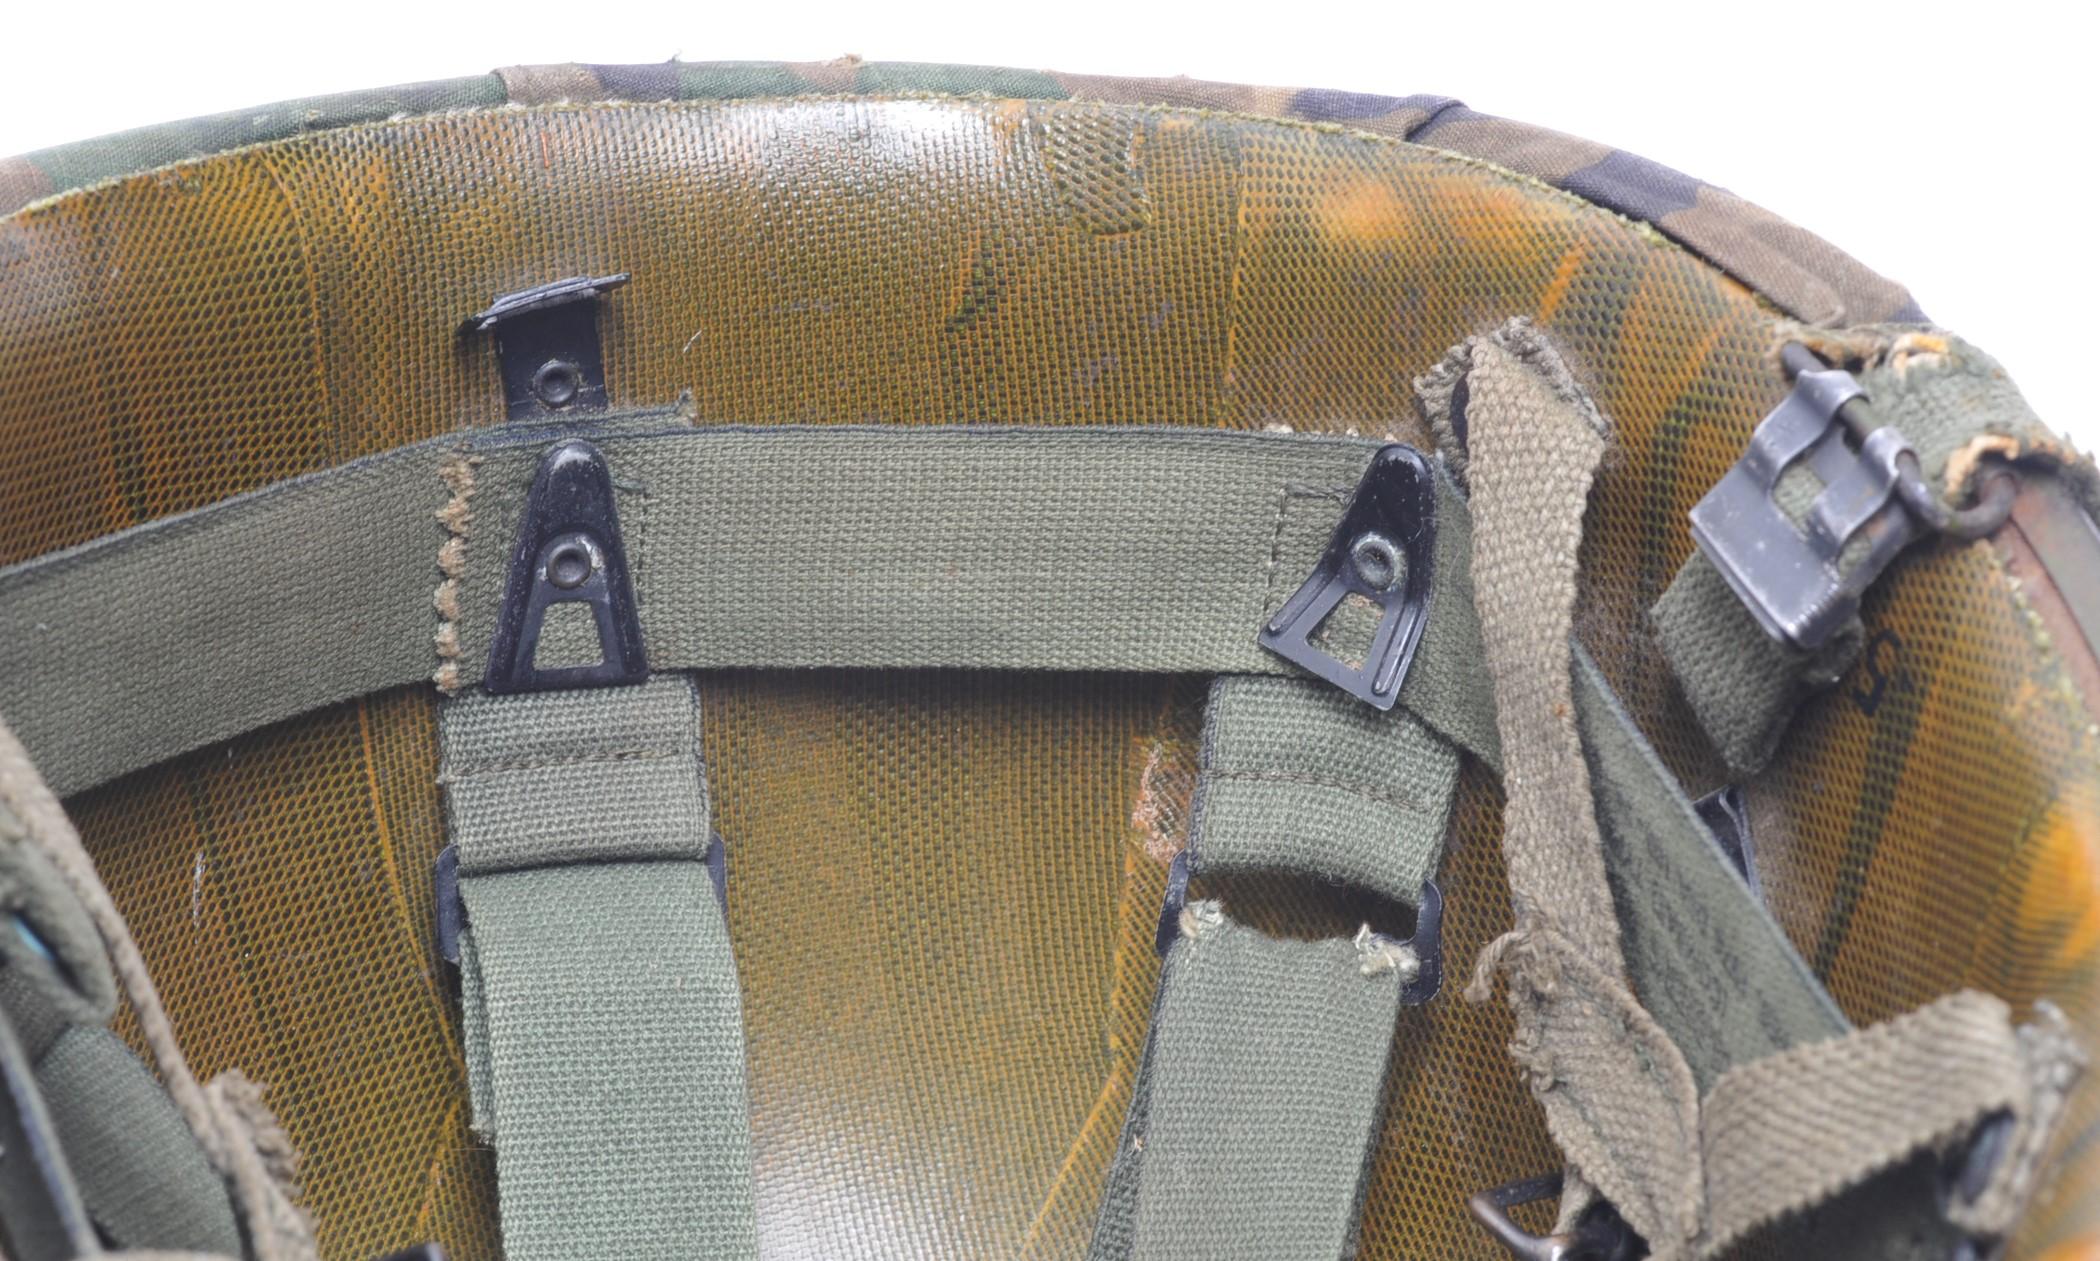 US Military 1970-80s era M1 Helmet, Liner amd Camo Cover (RSO)